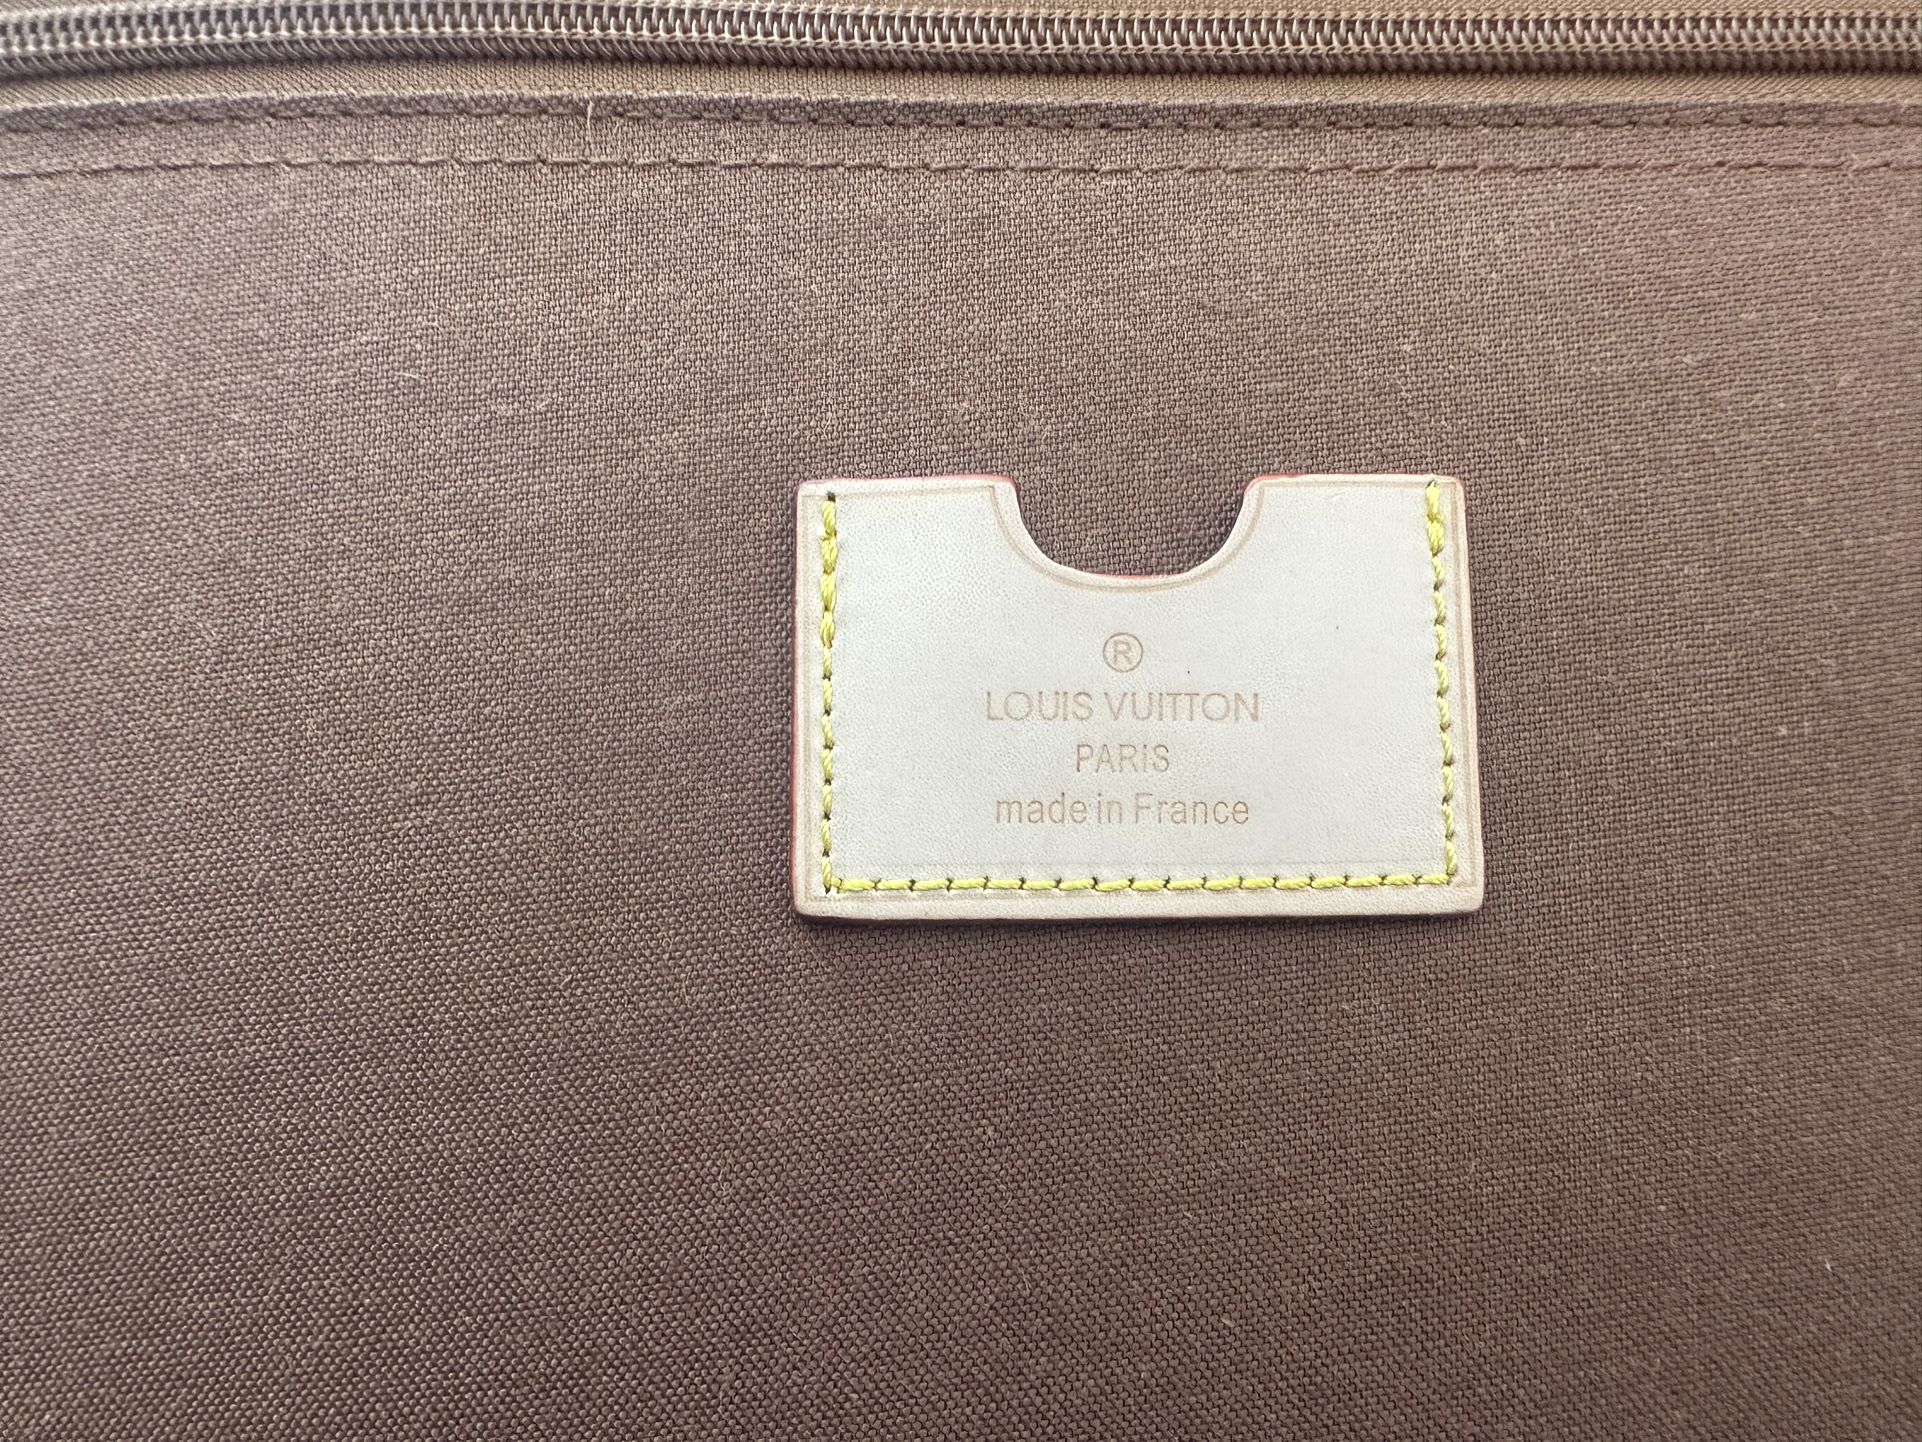 LOUIS VUITTON INVENTEUR Hand Bag for Sale in Salem, OR - OfferUp